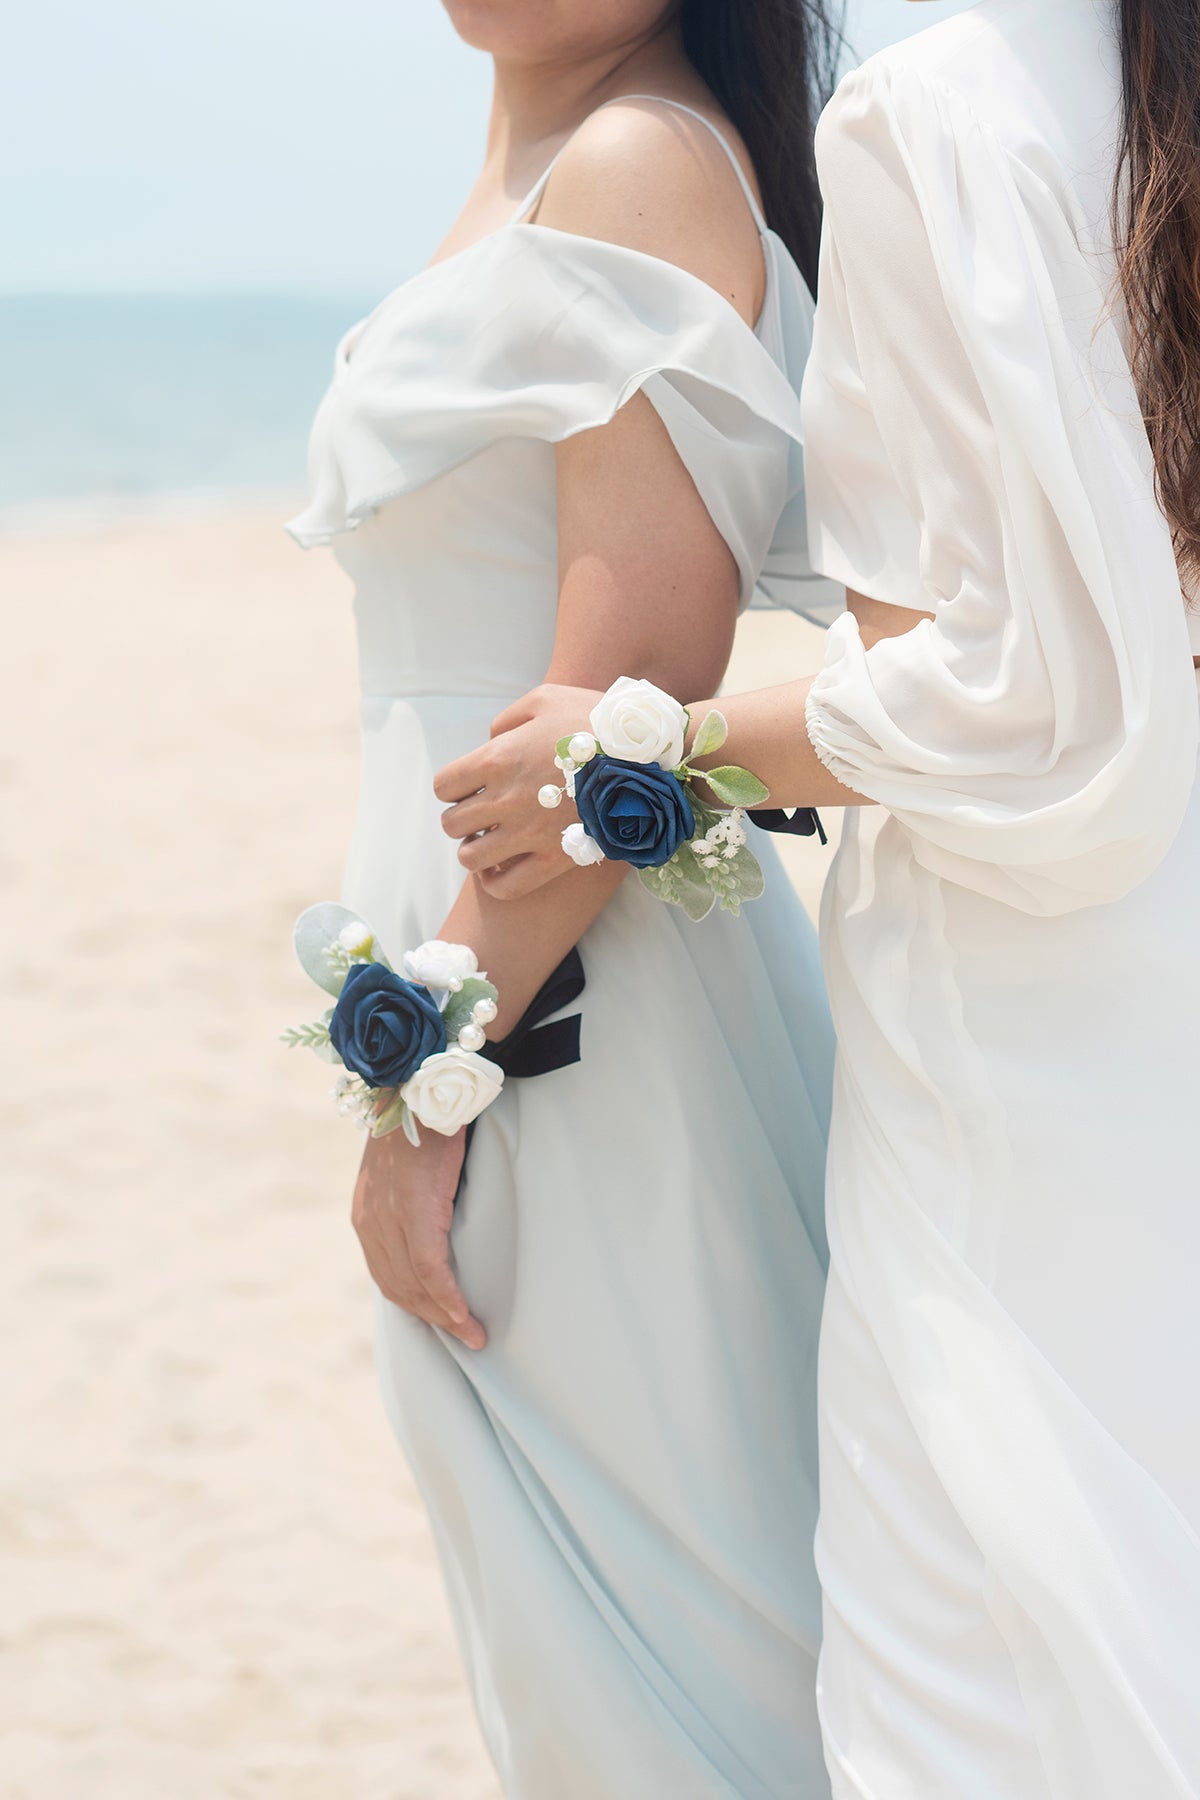 Pre-Arranged Wedding Flower Packages in Dusty Blue & Navy